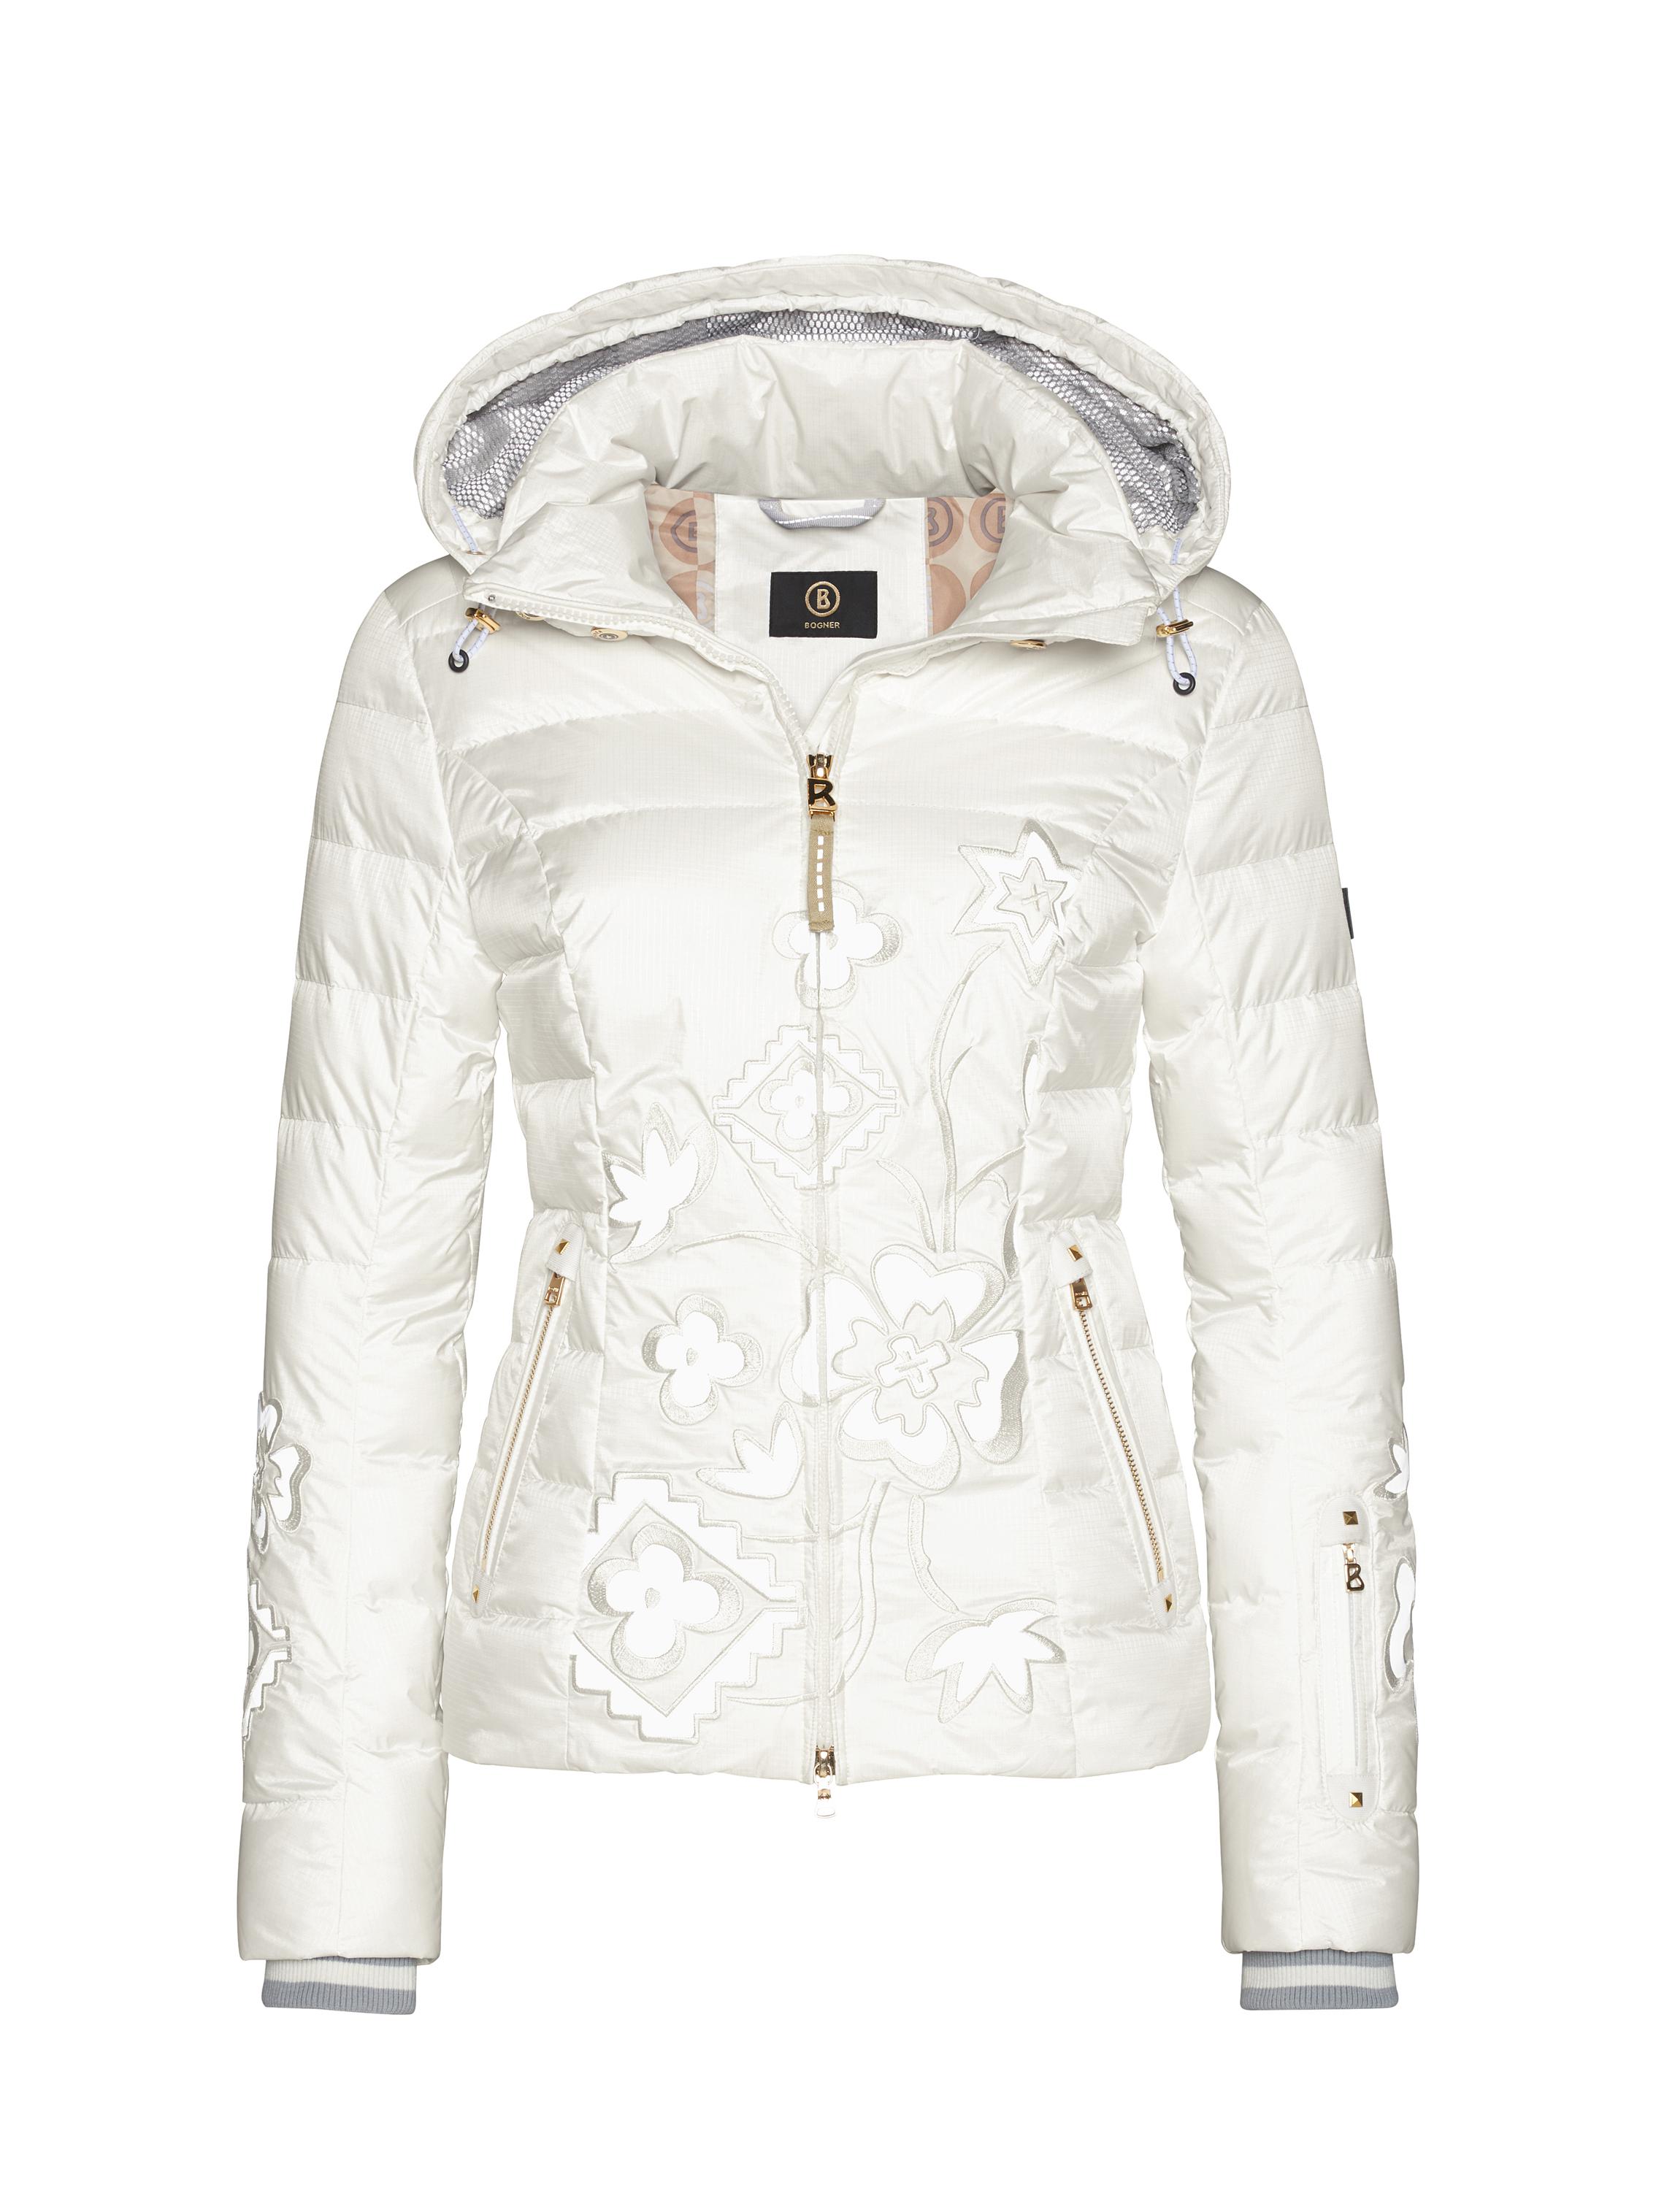 Bogner Fur Ski Jacket Cyra in White - Lyst